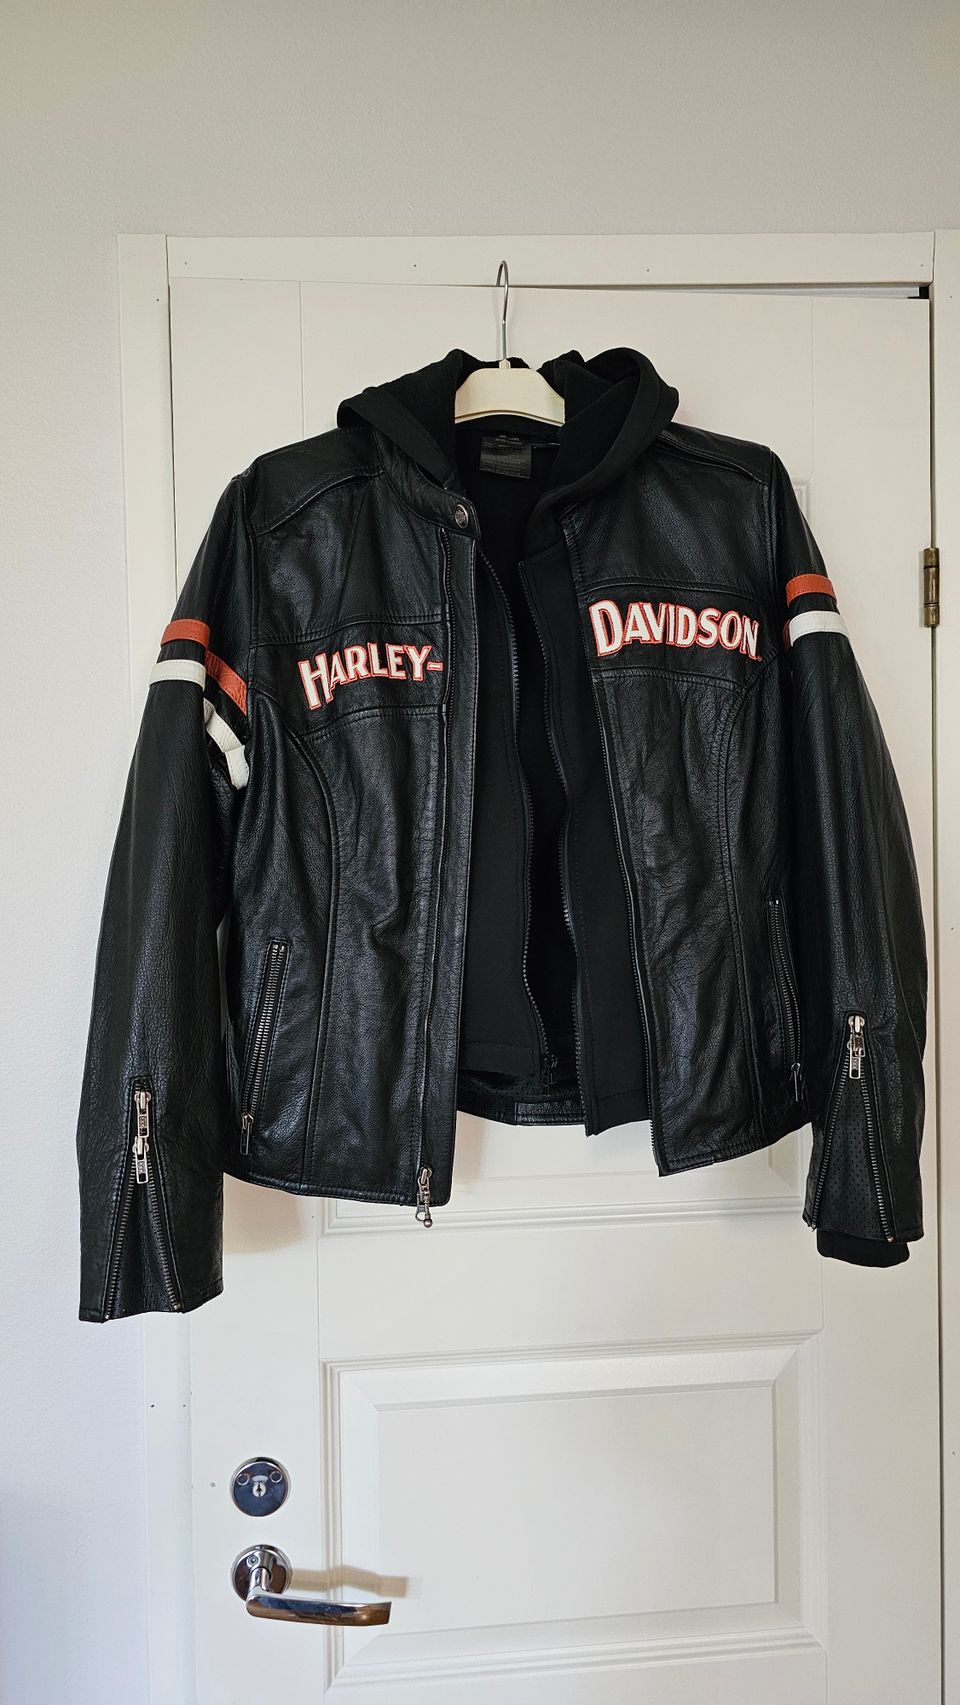 Aito Harley Davidson nahkatakki S, kuin uusi!